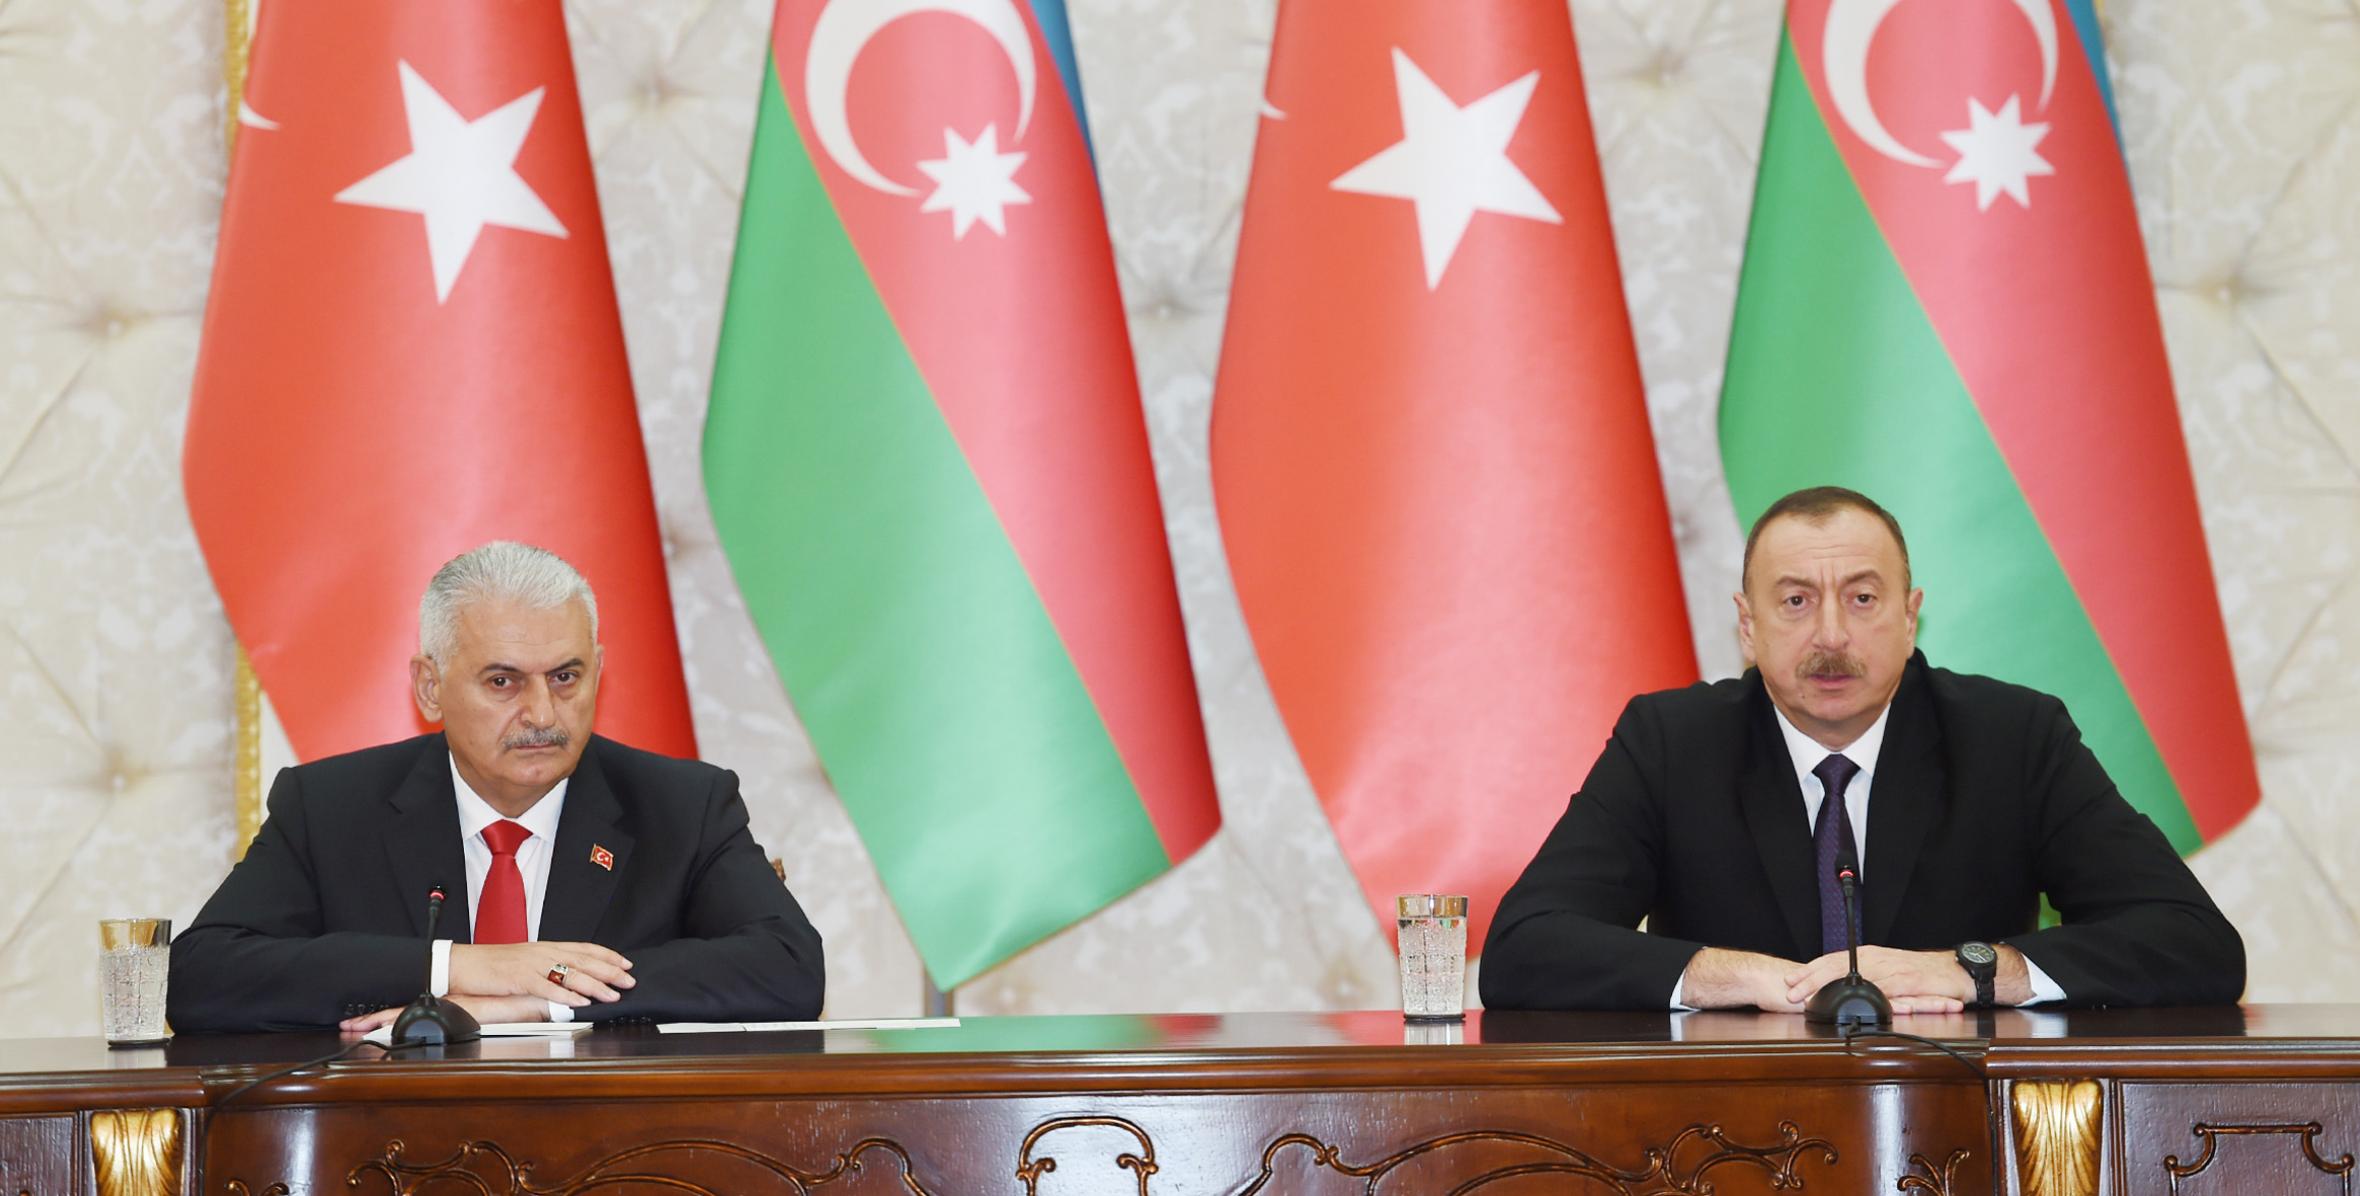 Ilham Aliyev and Turkish Prime Minister Binali Yildirim made statements for the press